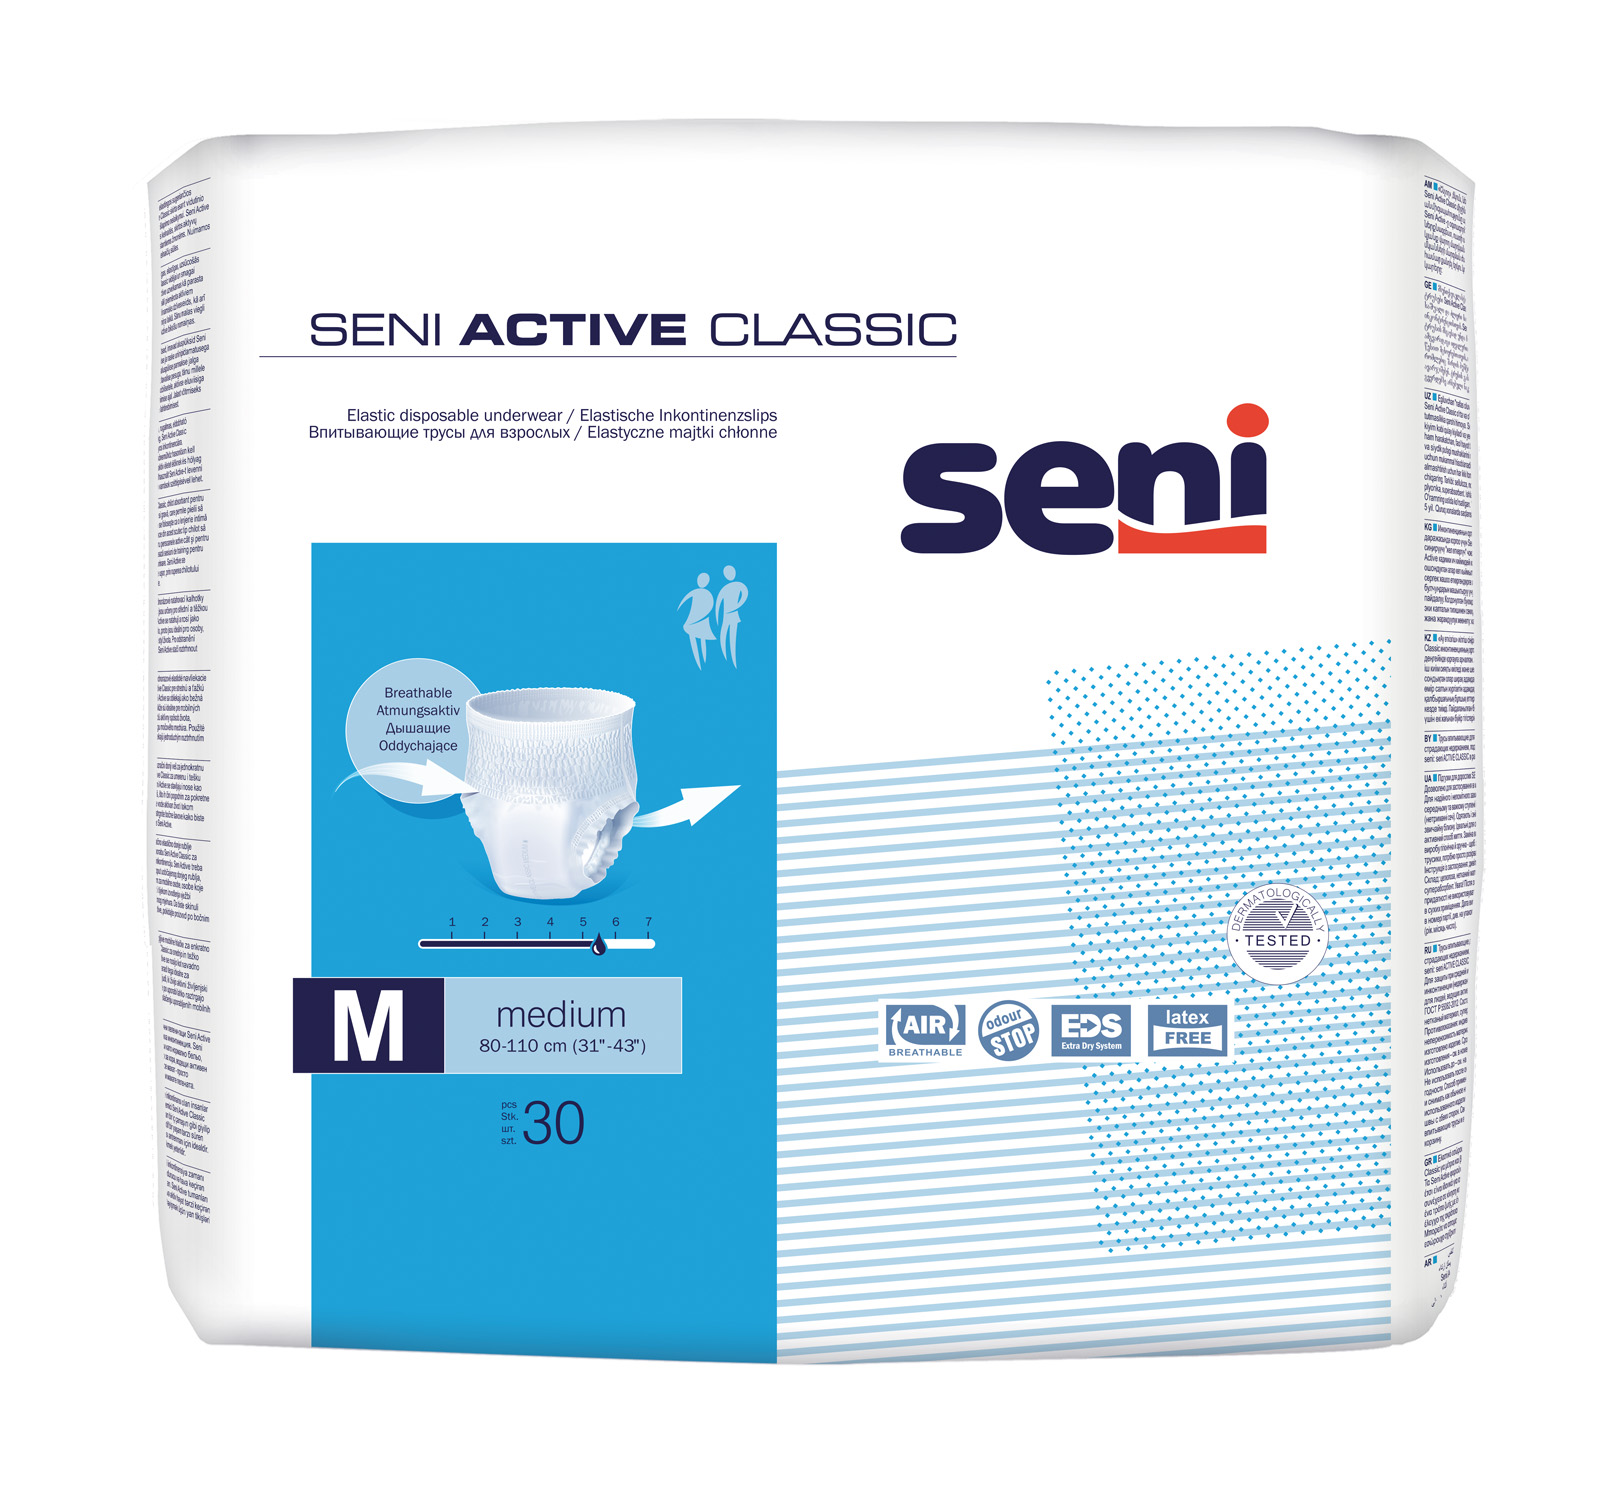 Seni Active Classic elastische Inkontinenzpants Medium 30 Stück